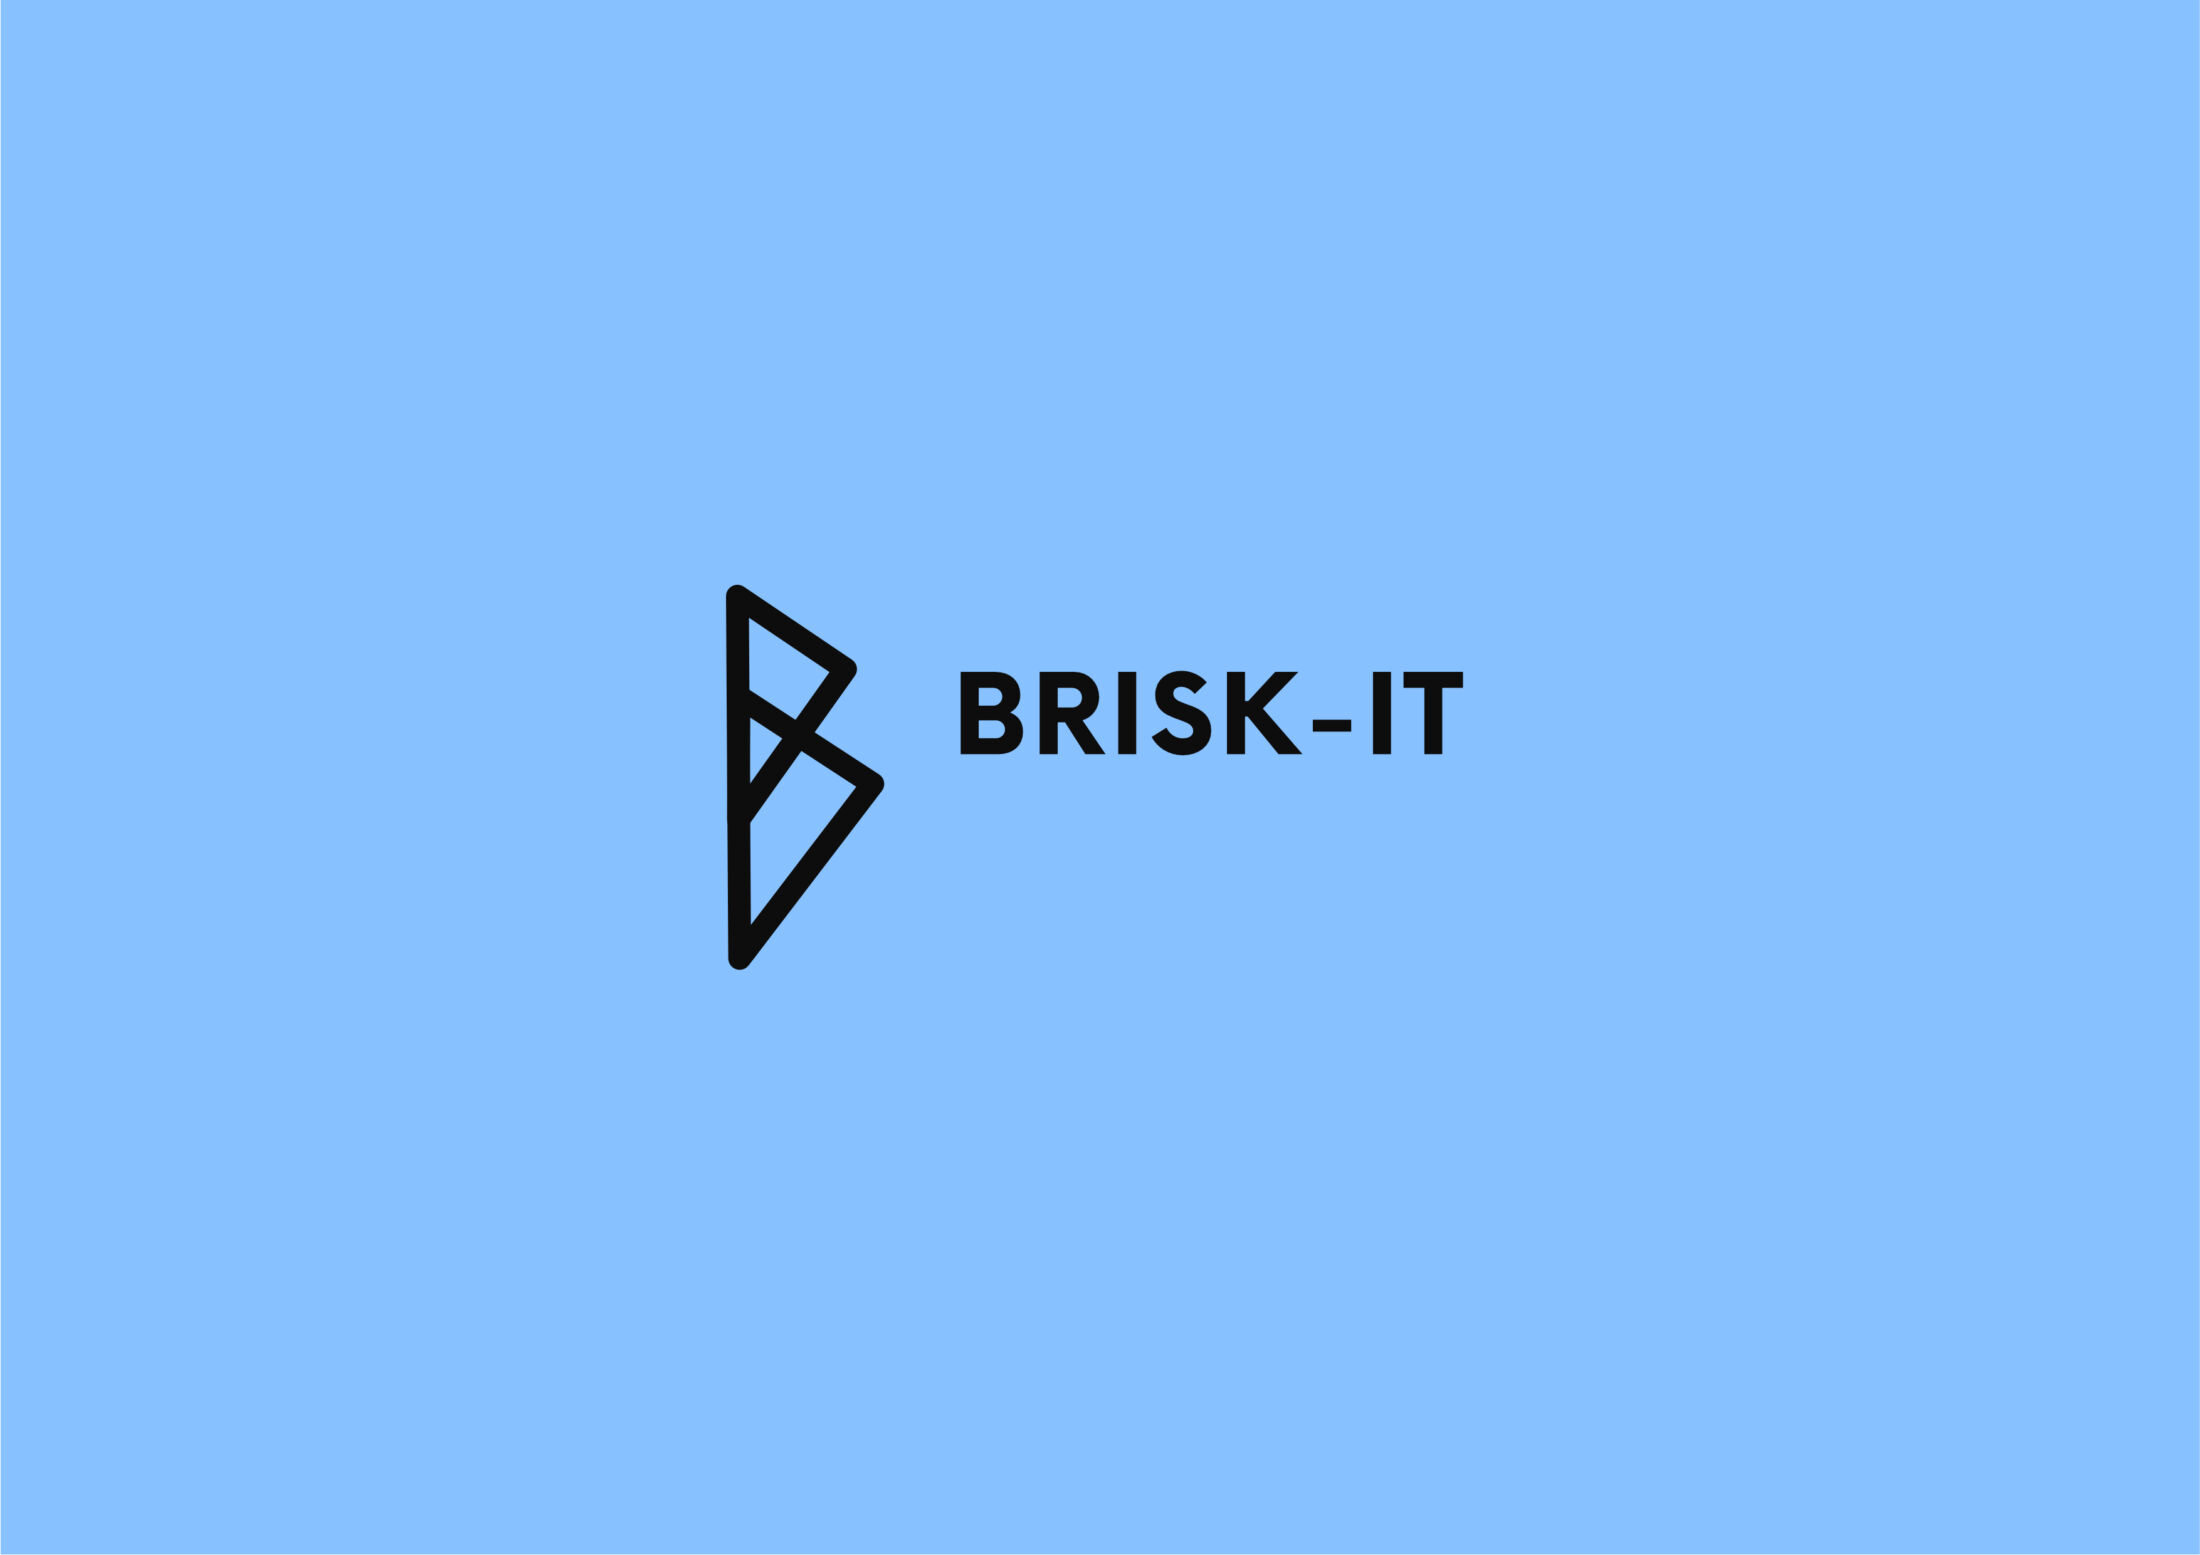 BriskIT logo colored